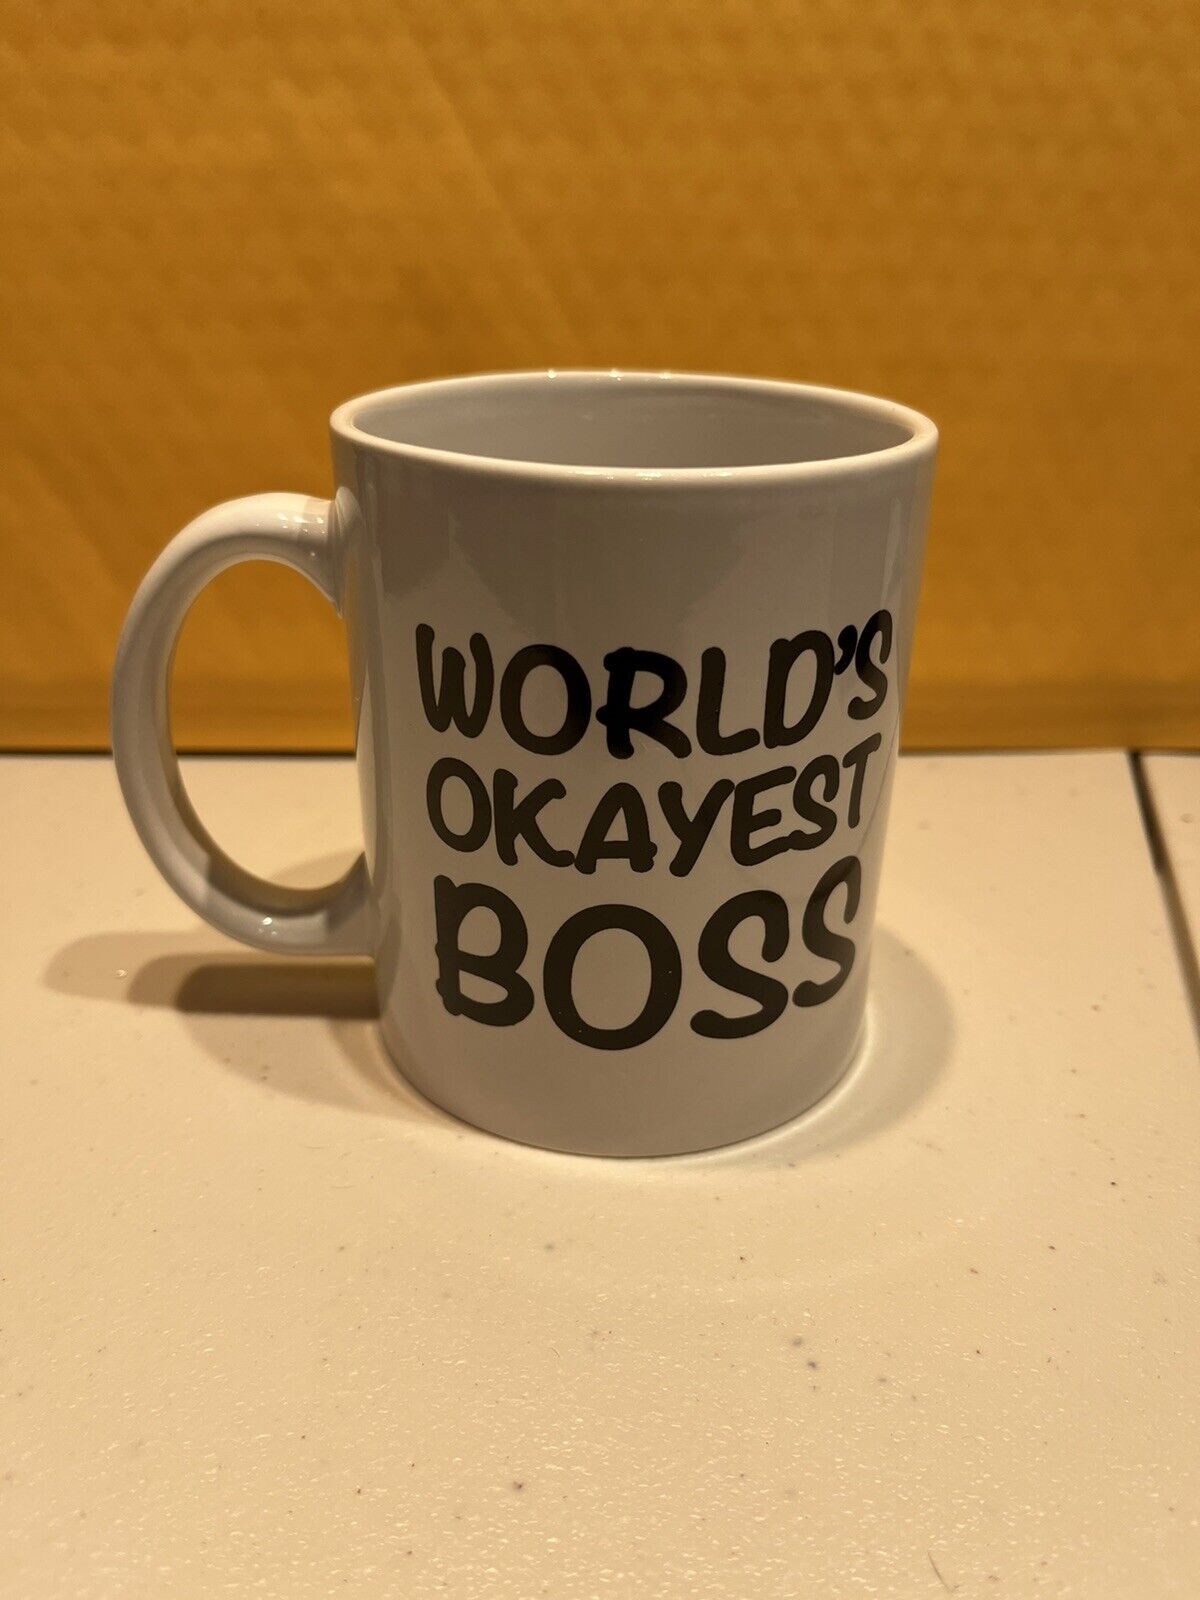 “worlds okayest boss” mug brand new in box great gift idea christmas boss gift